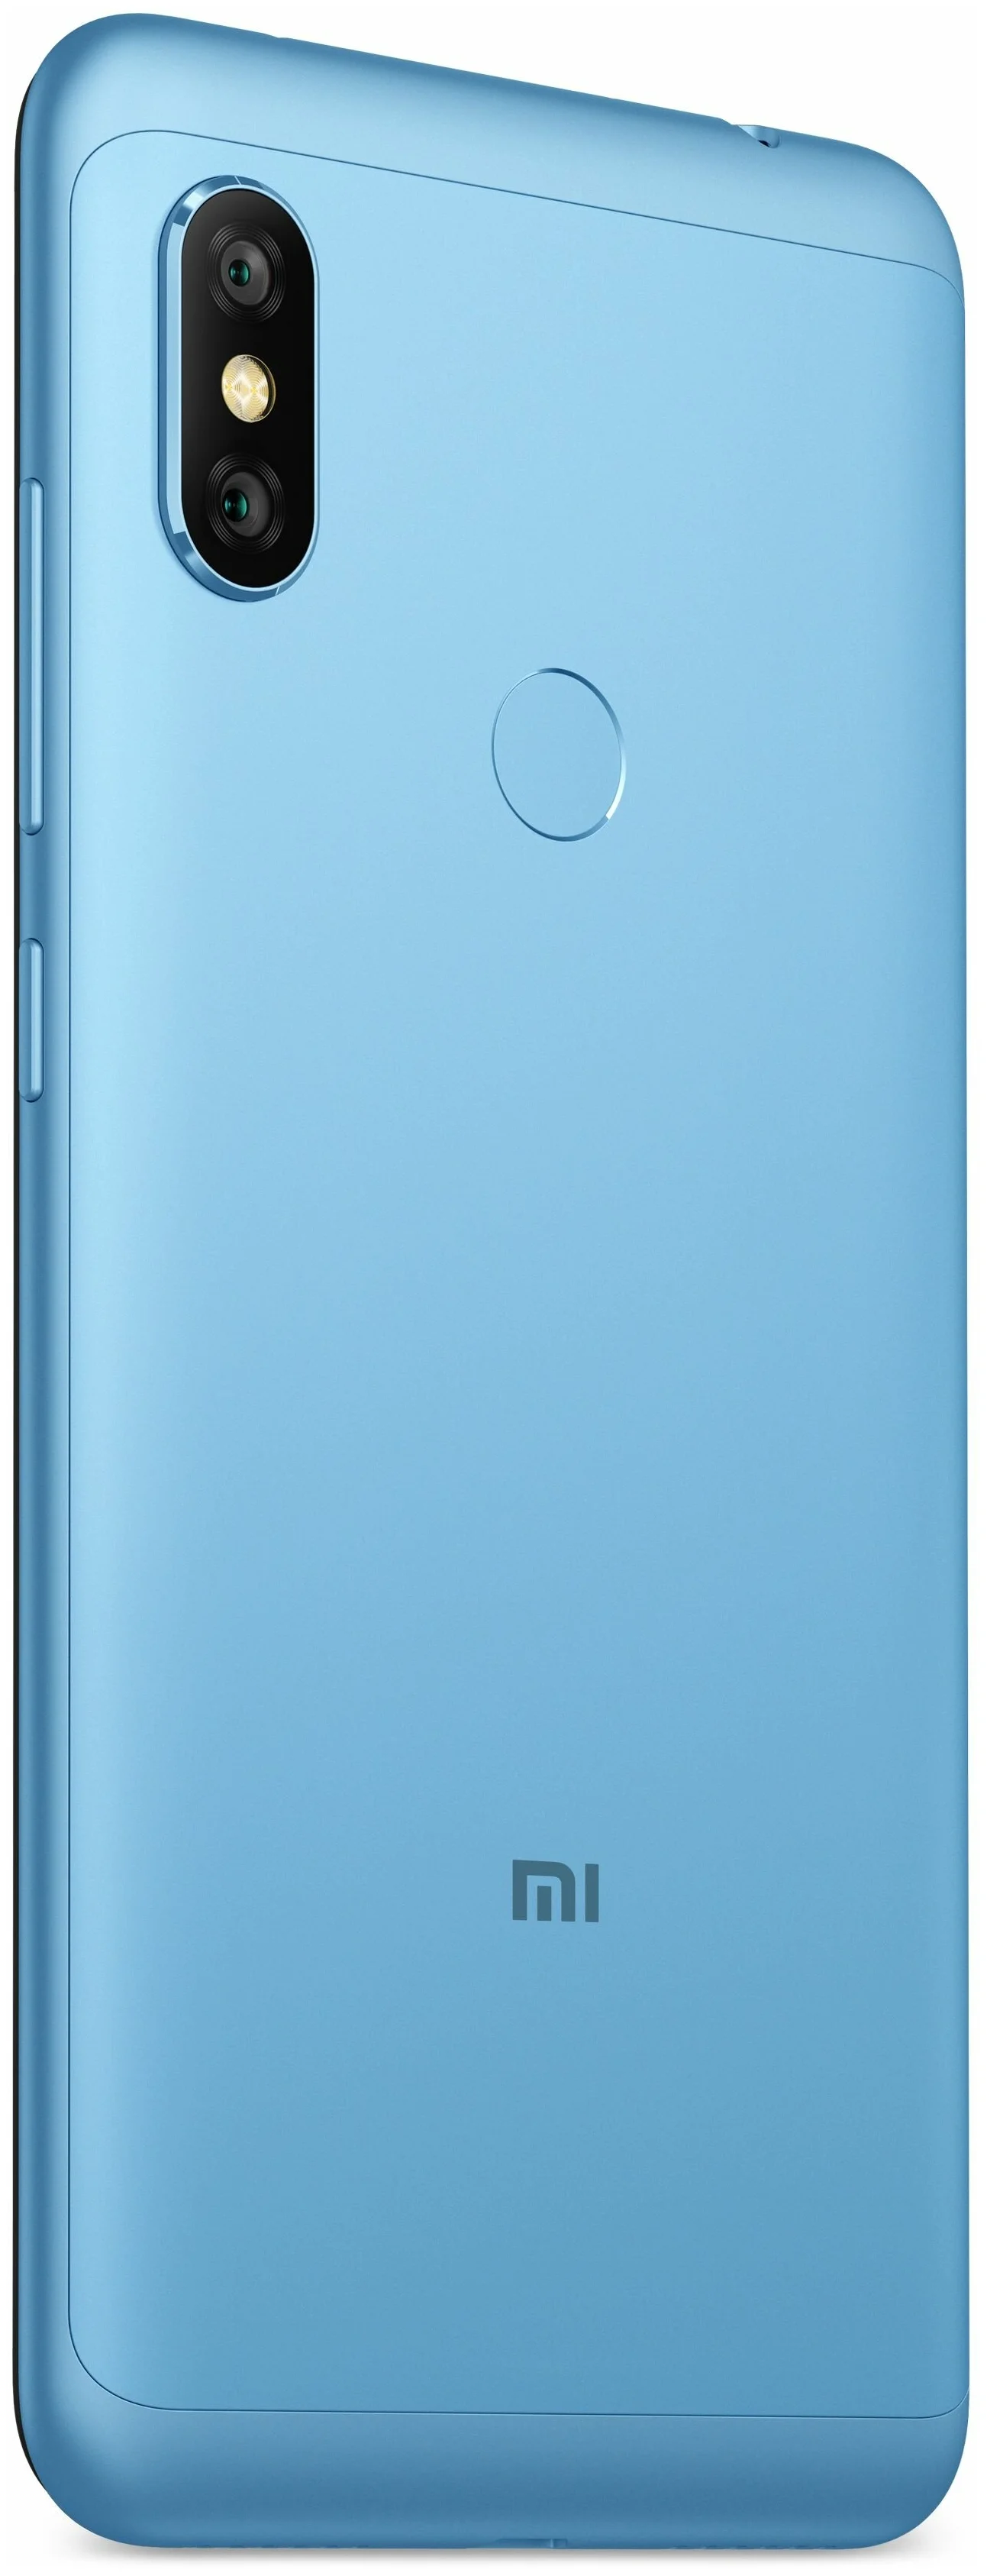 Xiaomi Redmi Note 6 Pro 4/64GB - память: 64 ГБ, слот для карты памяти